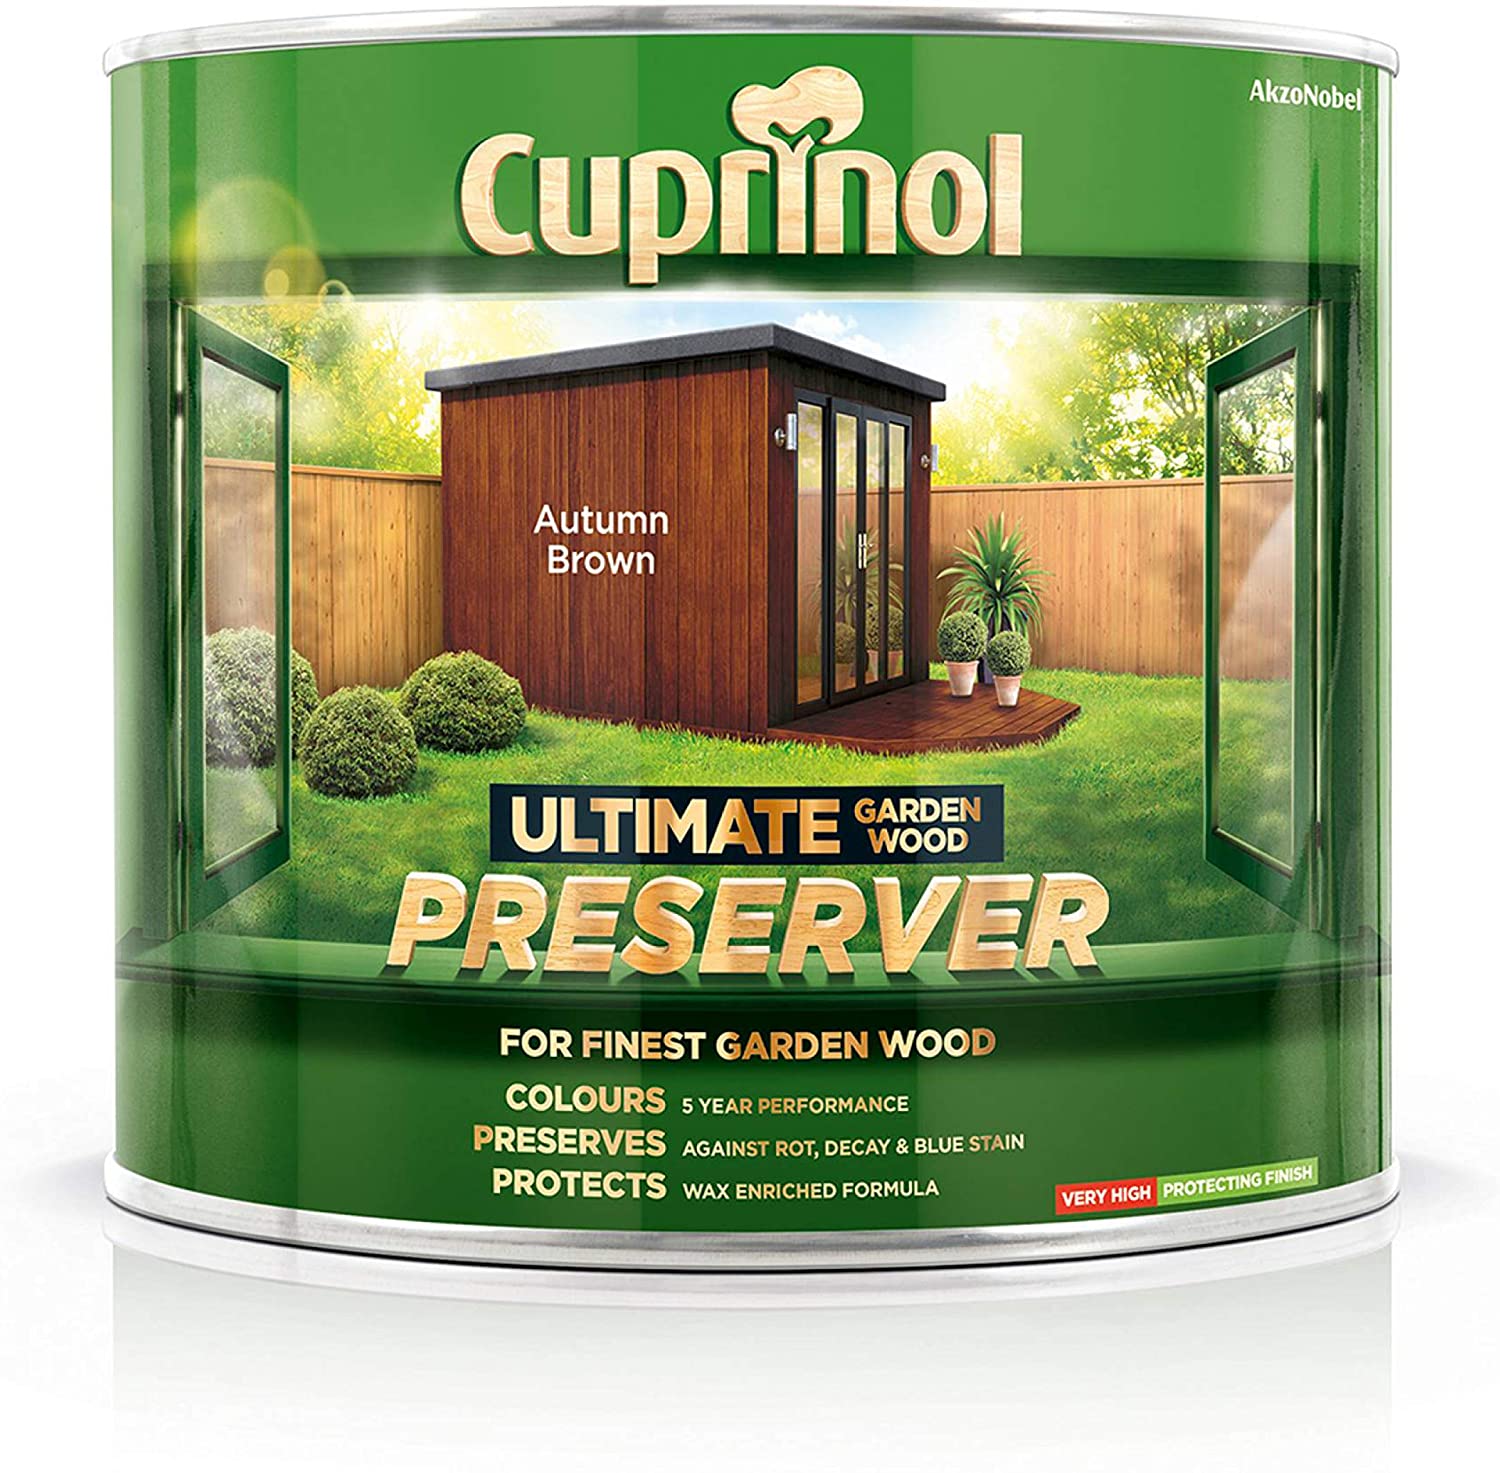 Cuprinol-Ultimate-Garden-Wood-Preserver-Autumn-Brown-1-Litre